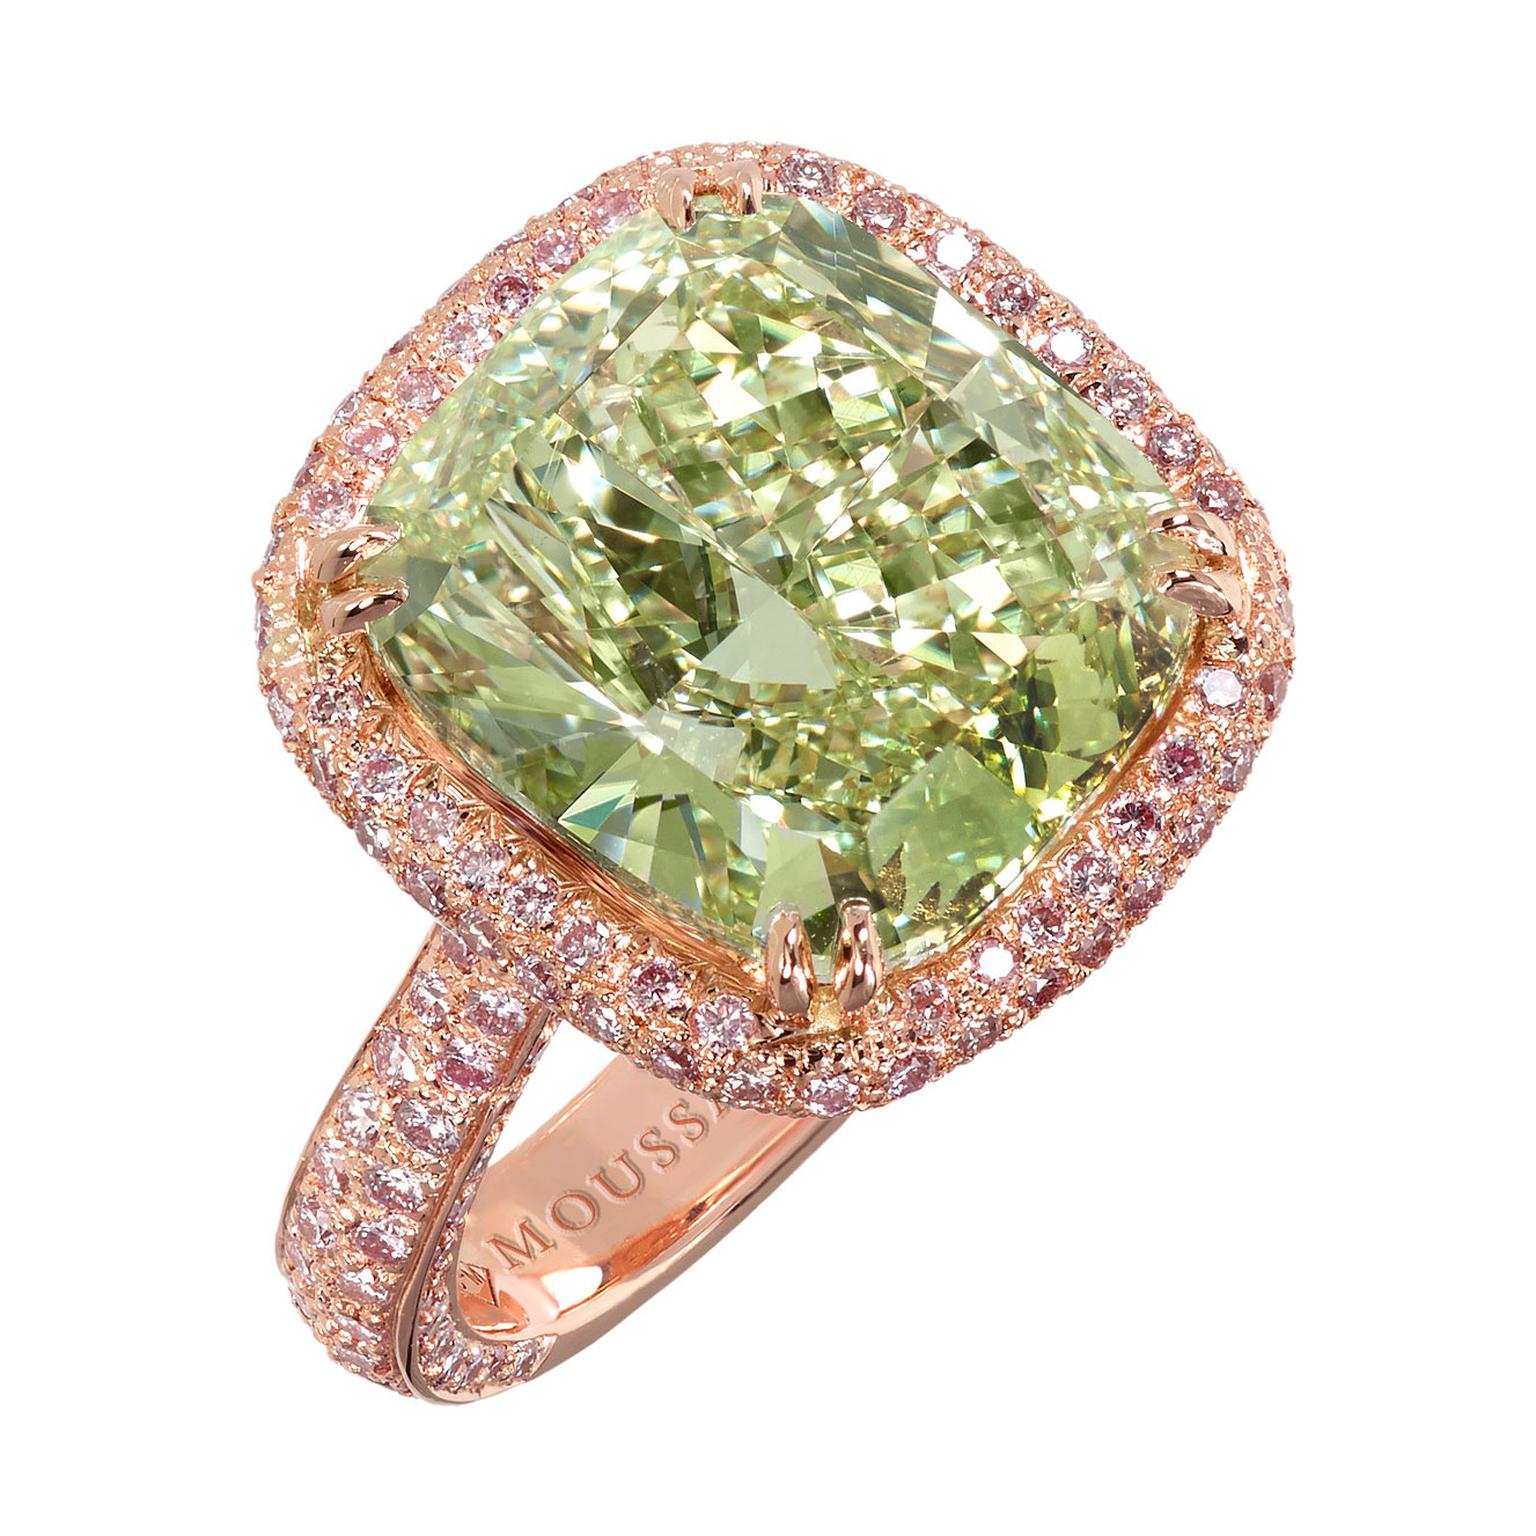 Moussaieff green diamond ring 6.51 carats